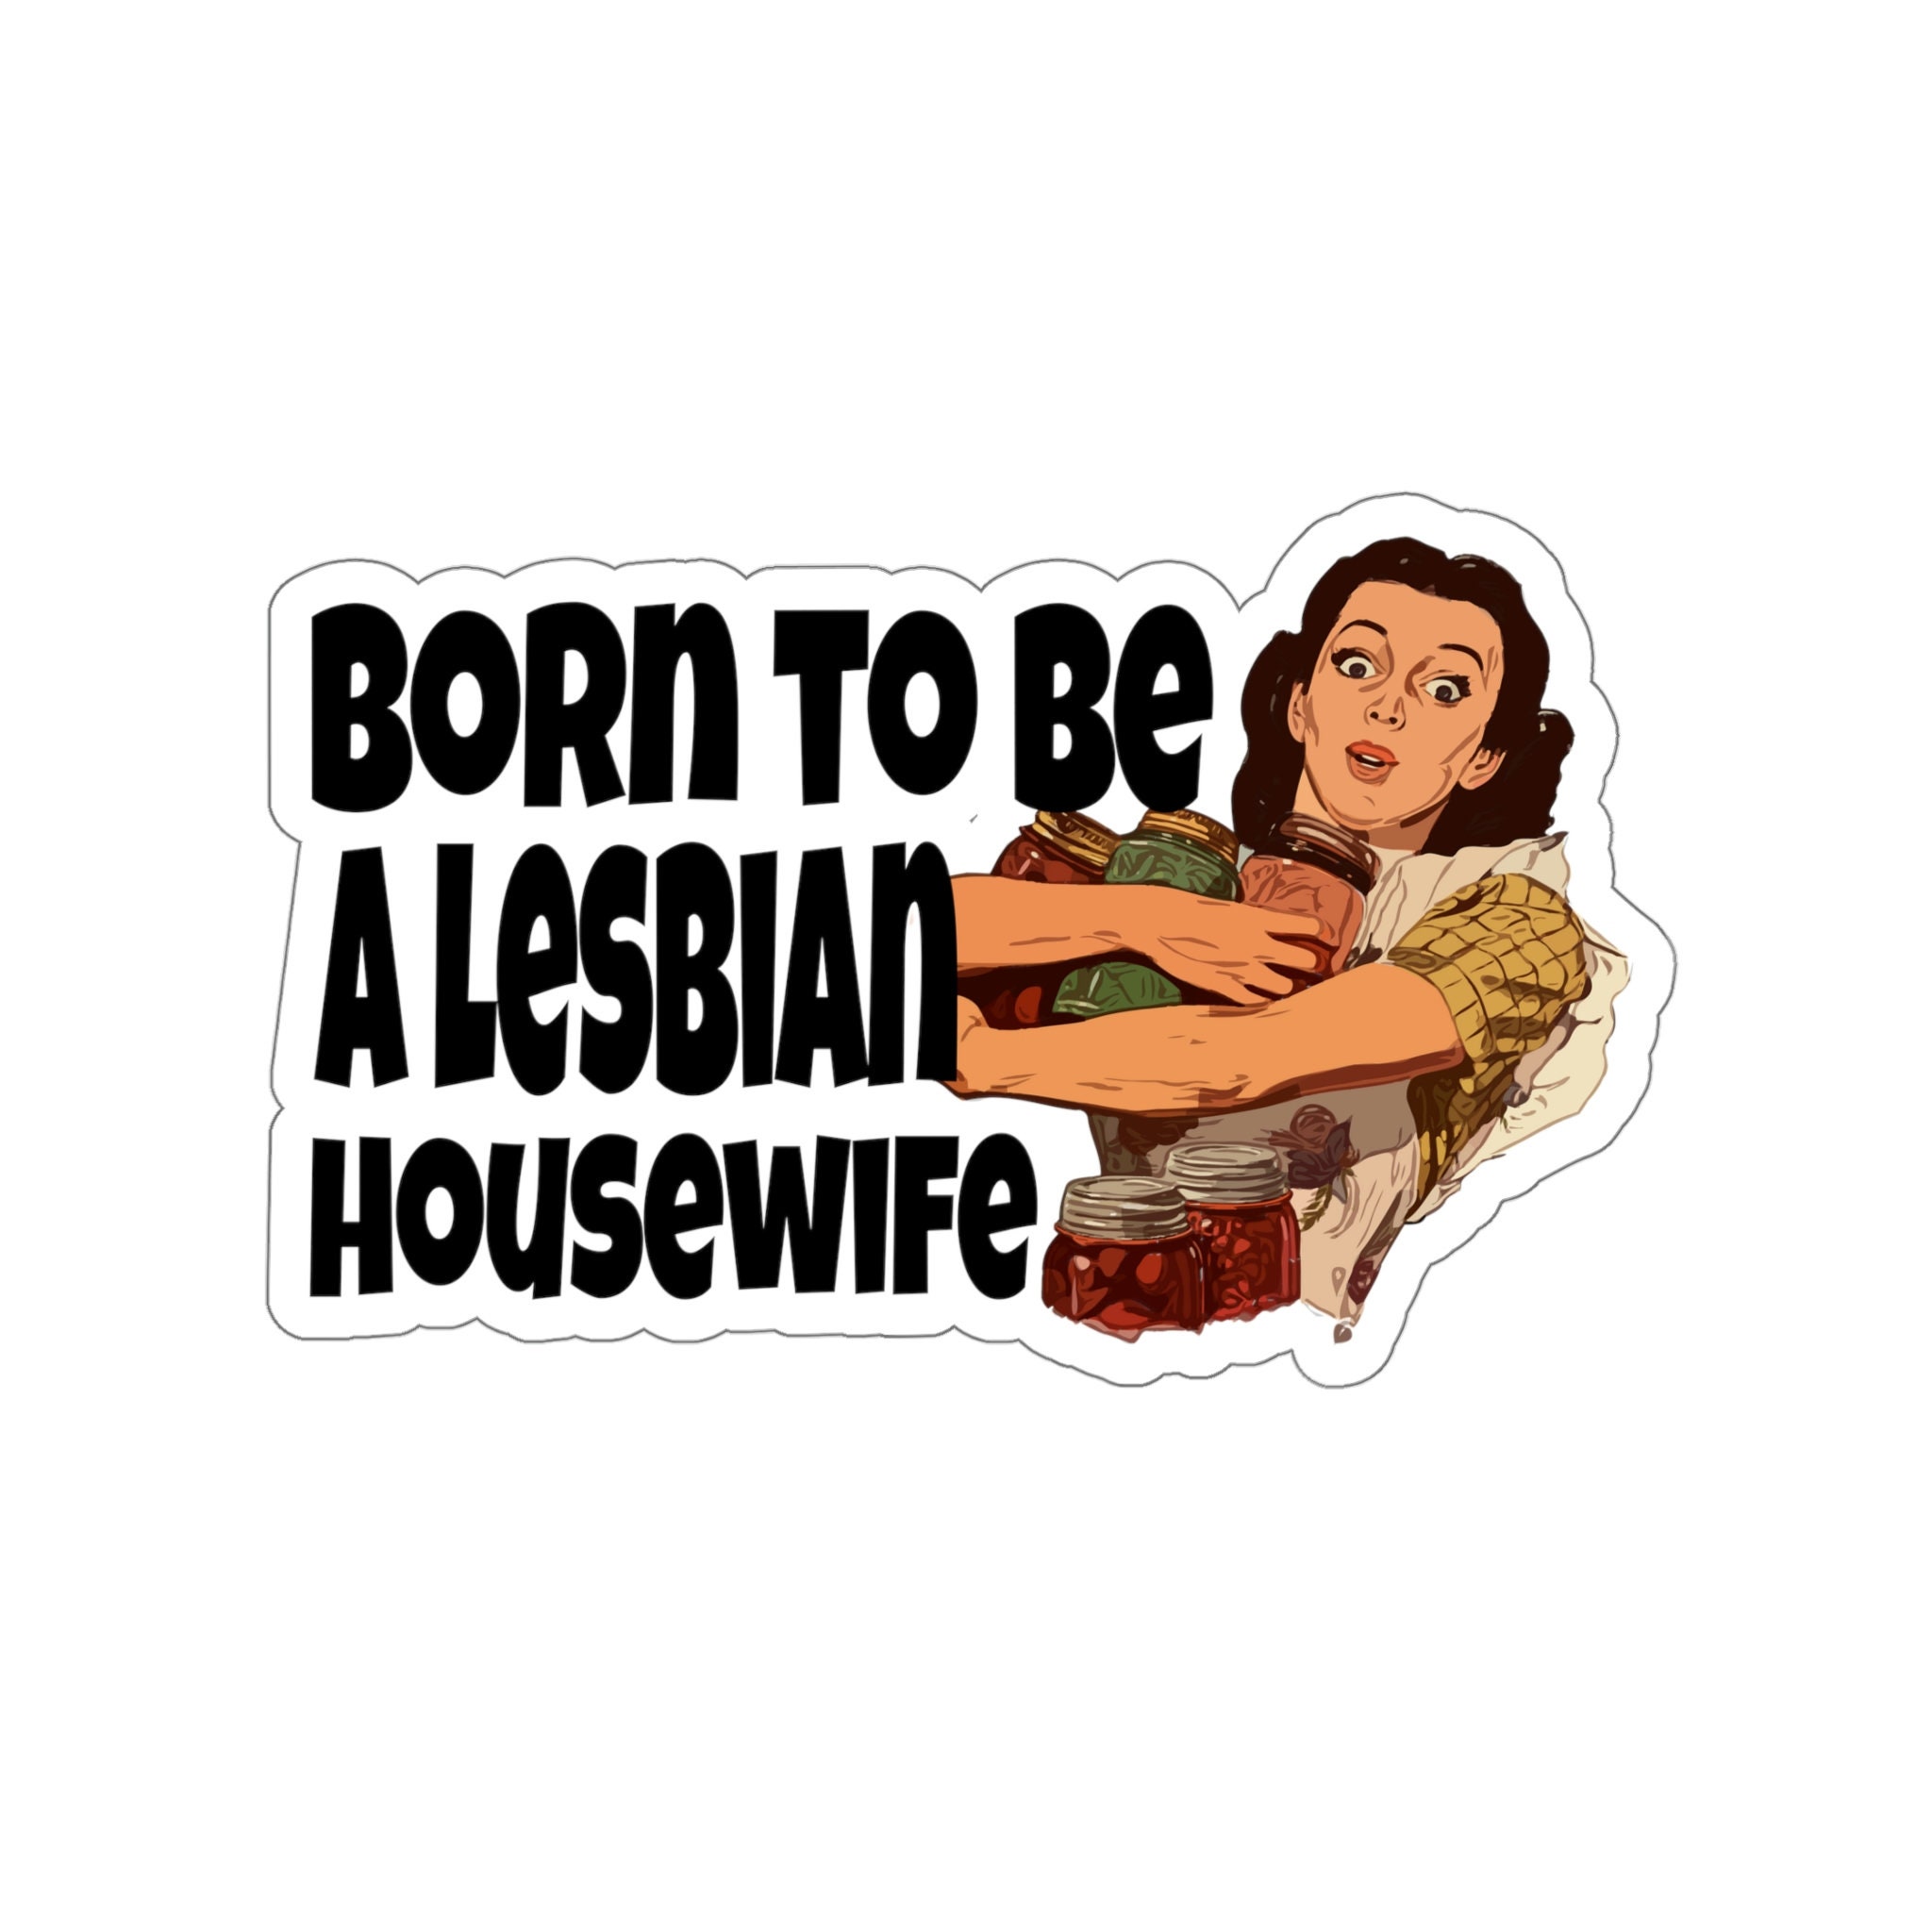 lesbian housewife books rm bali Porn Pics Hd